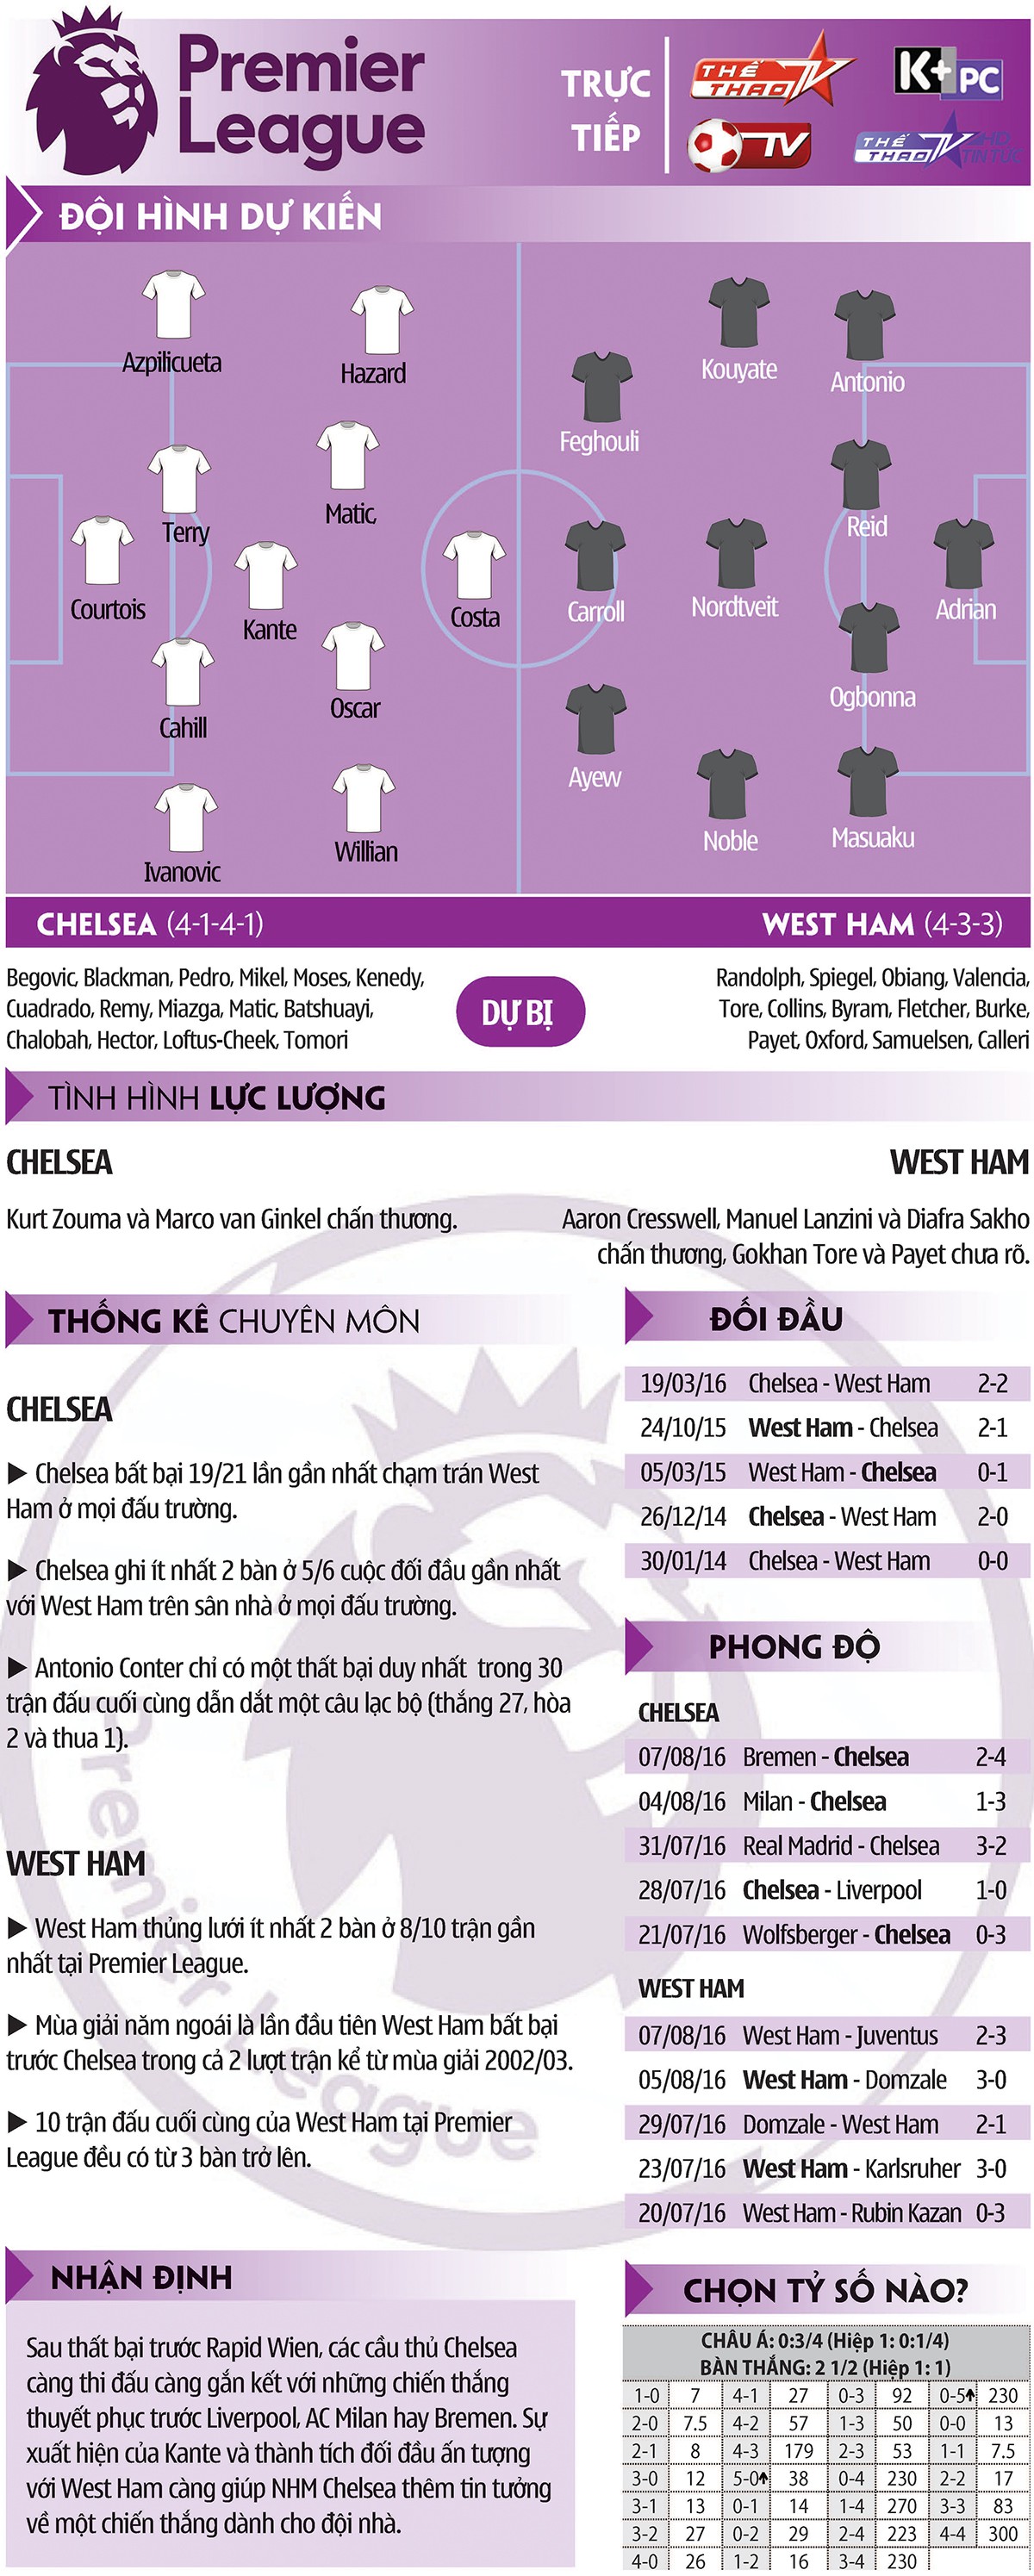 Premier League, Chelsea-West Ham: Cuộc đấu trí của hai “gã điên”